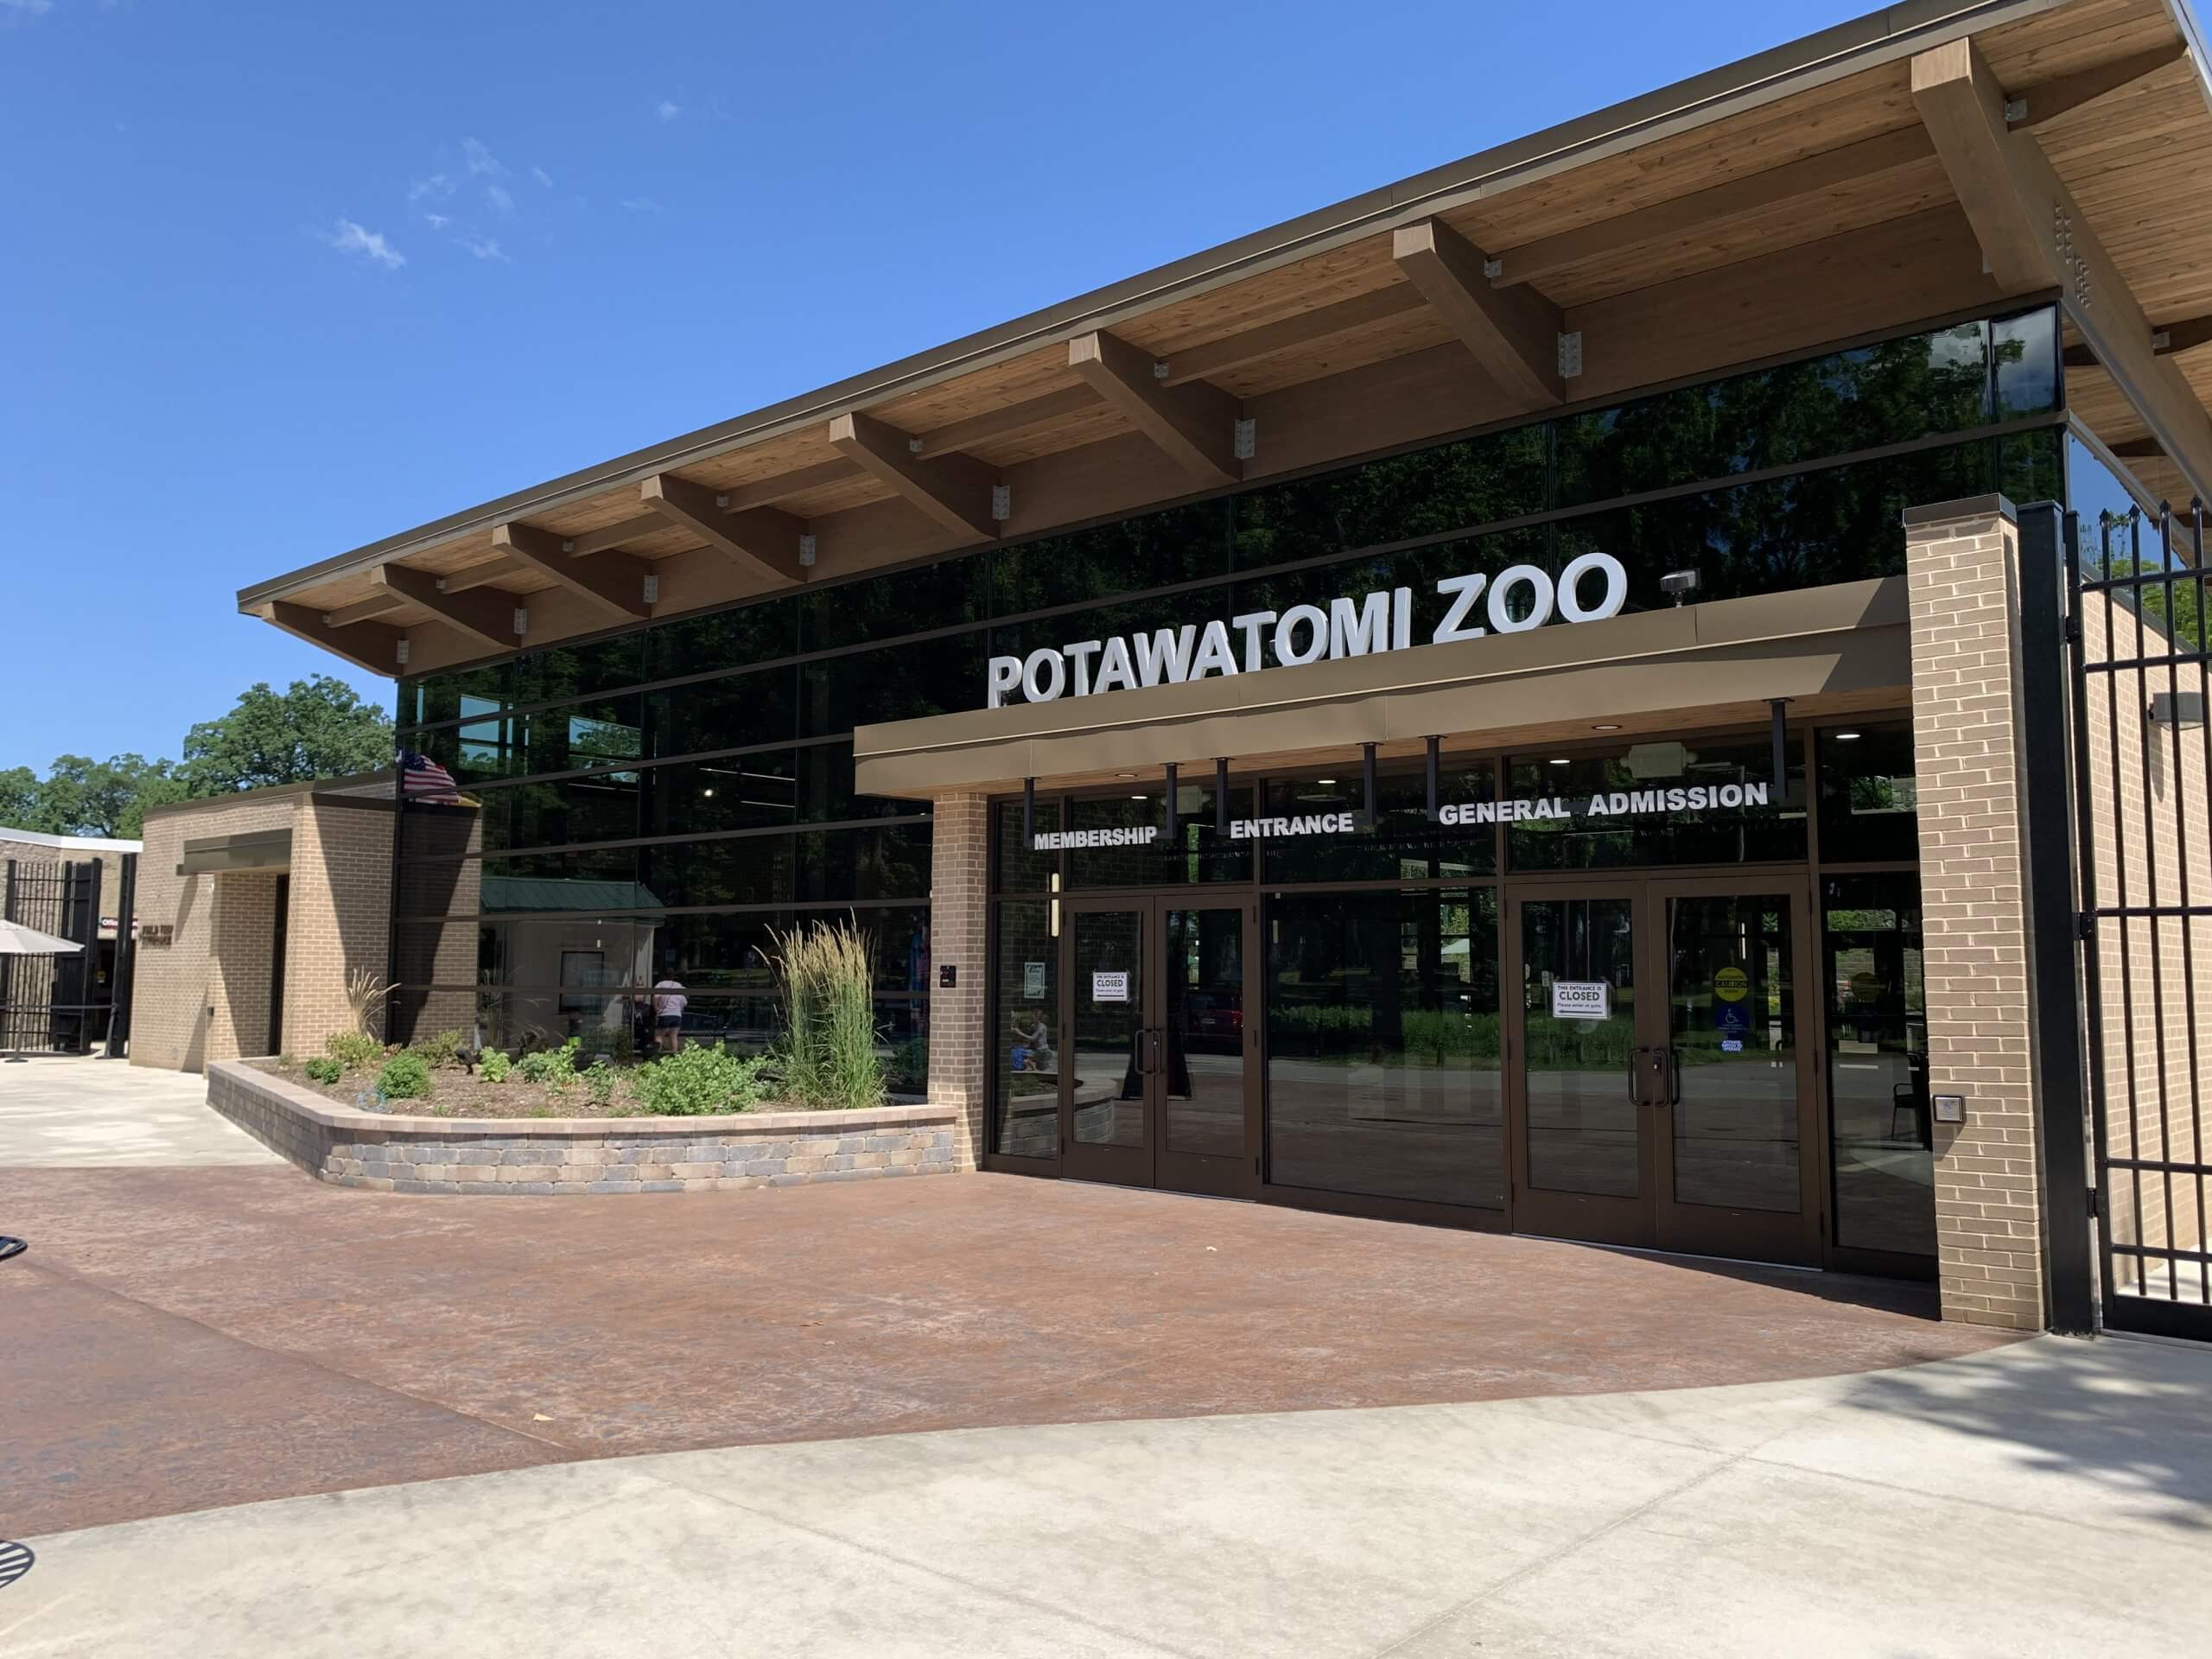 Potawatomi Zoo Entrance Ancon Construction